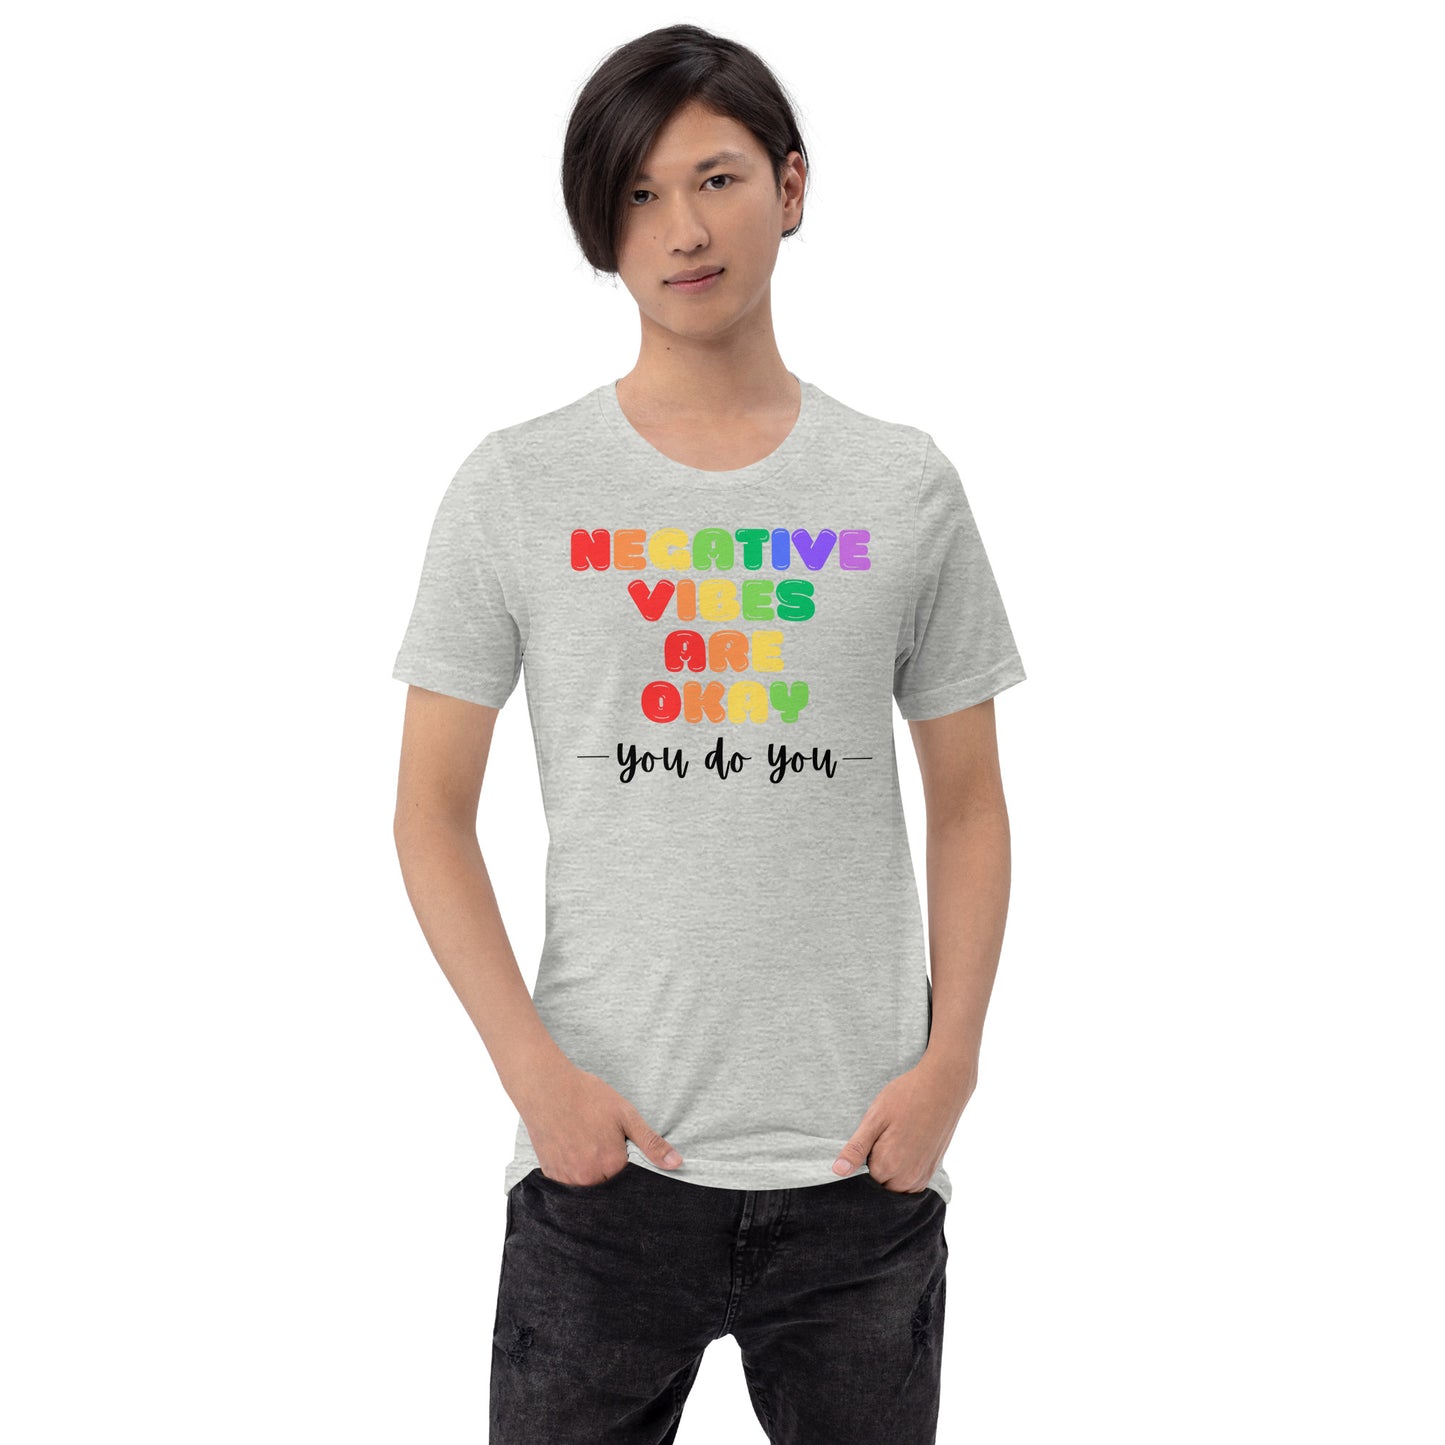 Negative Vibes are Okay - Light Unisex t-shirt